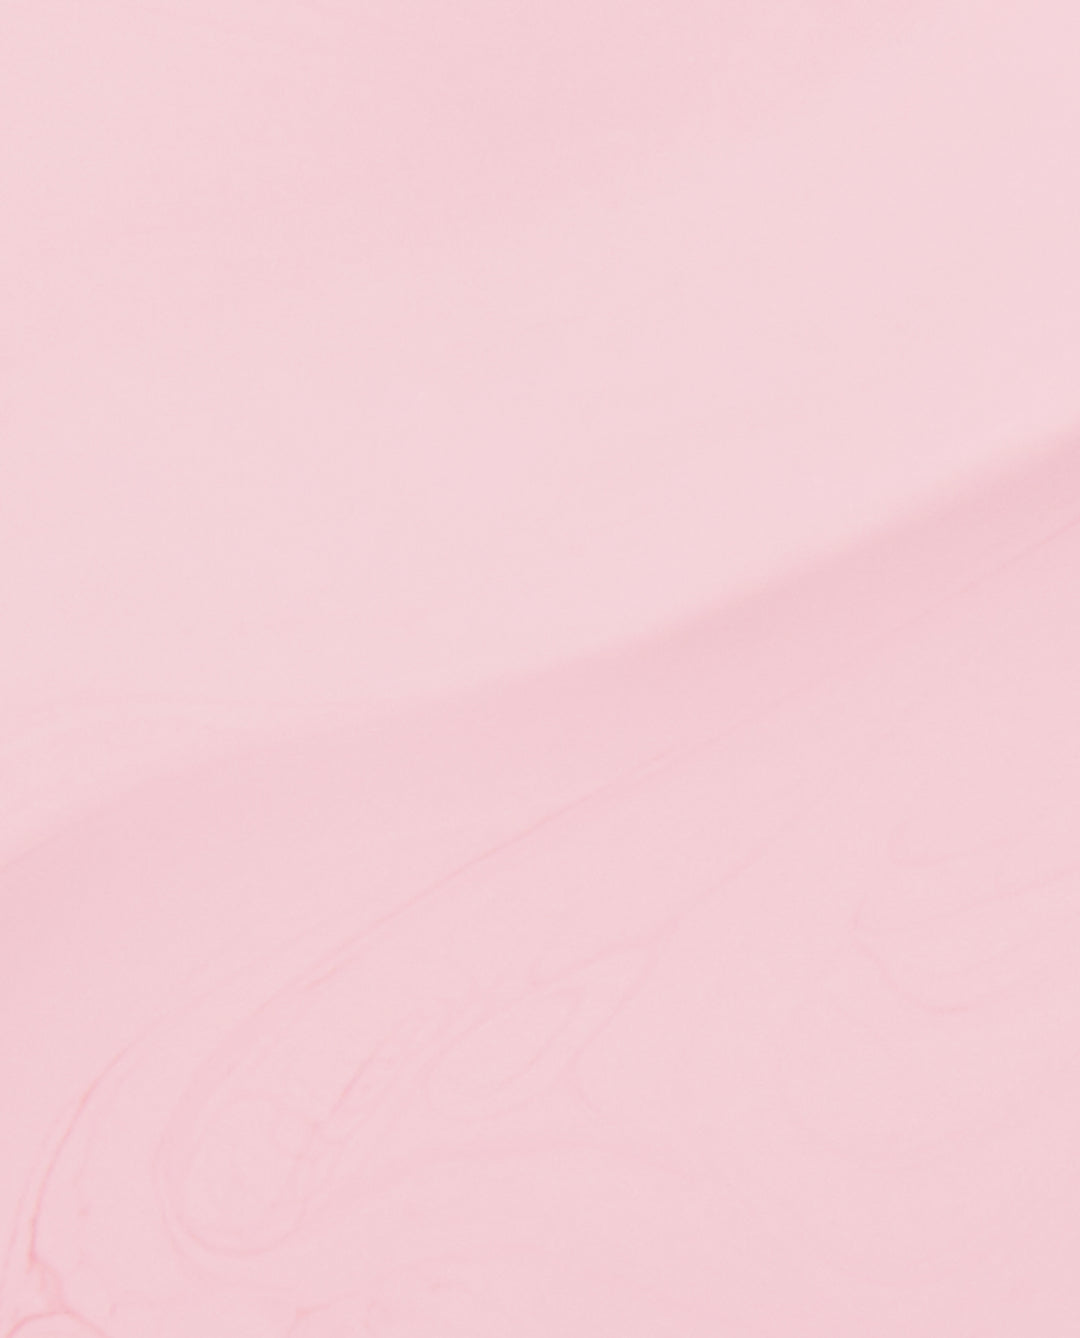 OPI Mod About You Pink Nail Polish Brush Swatch